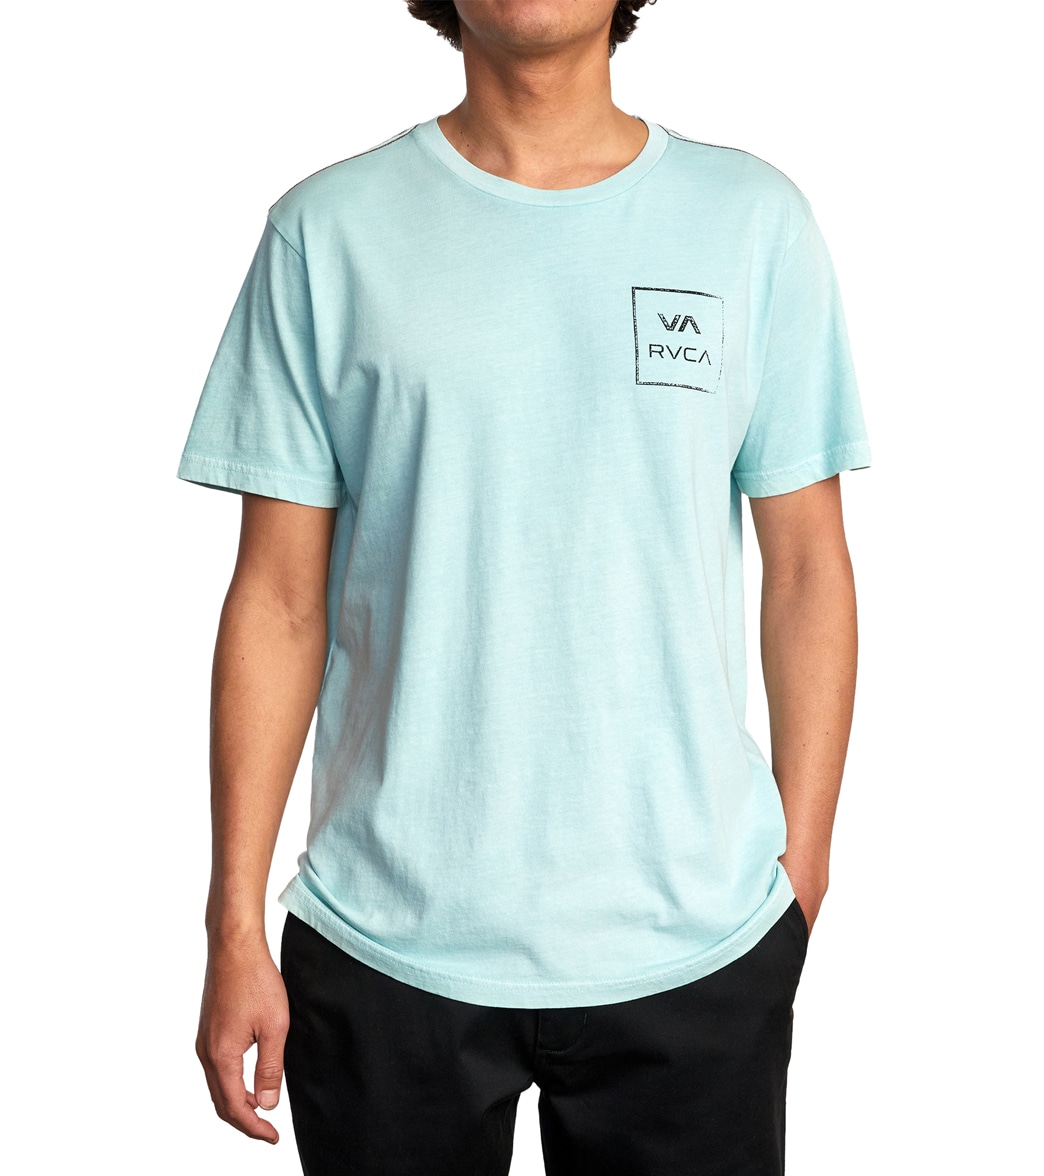 Rvca Men's All The Way Short Sleeve Tee Shirt - Aqua Haze Large Cotton - Swimoutlet.com